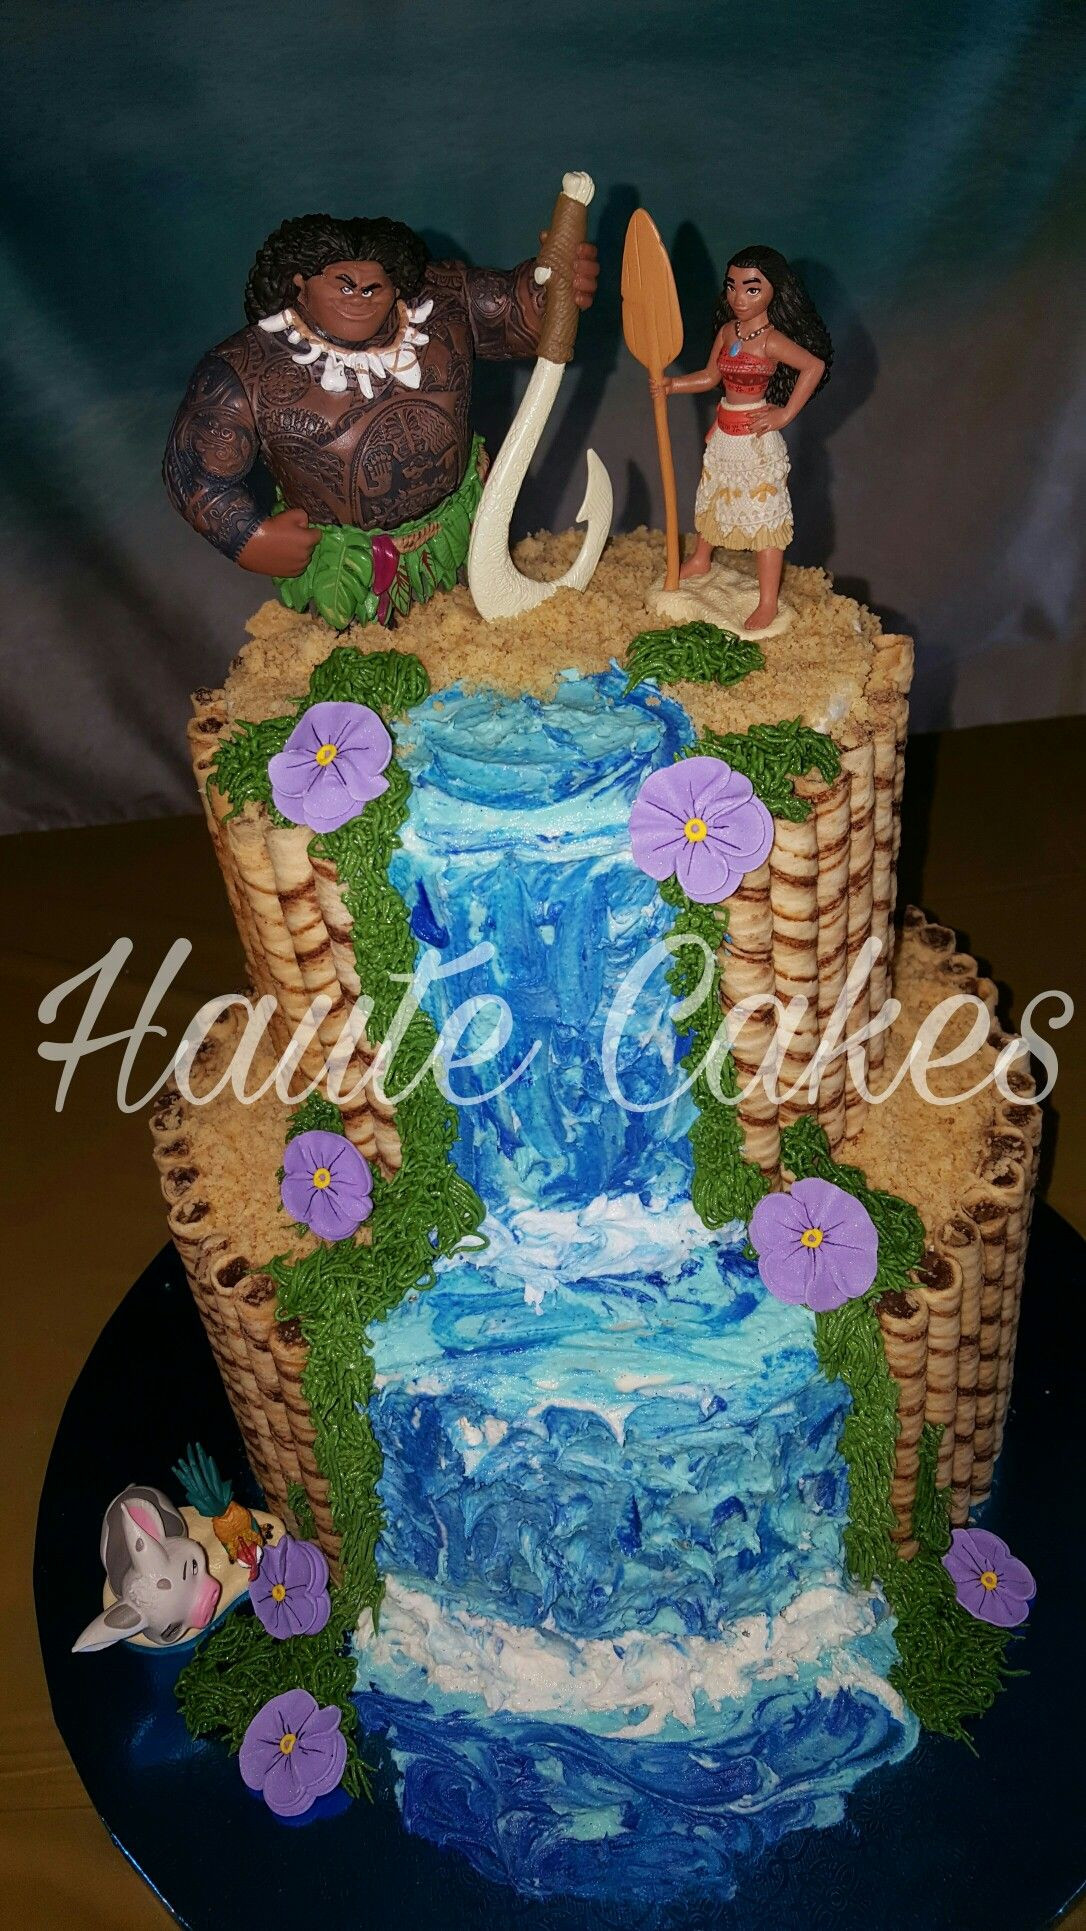 Best ideas about Moana Birthday Cake Ideas
. Save or Pin Moana cake Hauté cakes Pinterest Now.